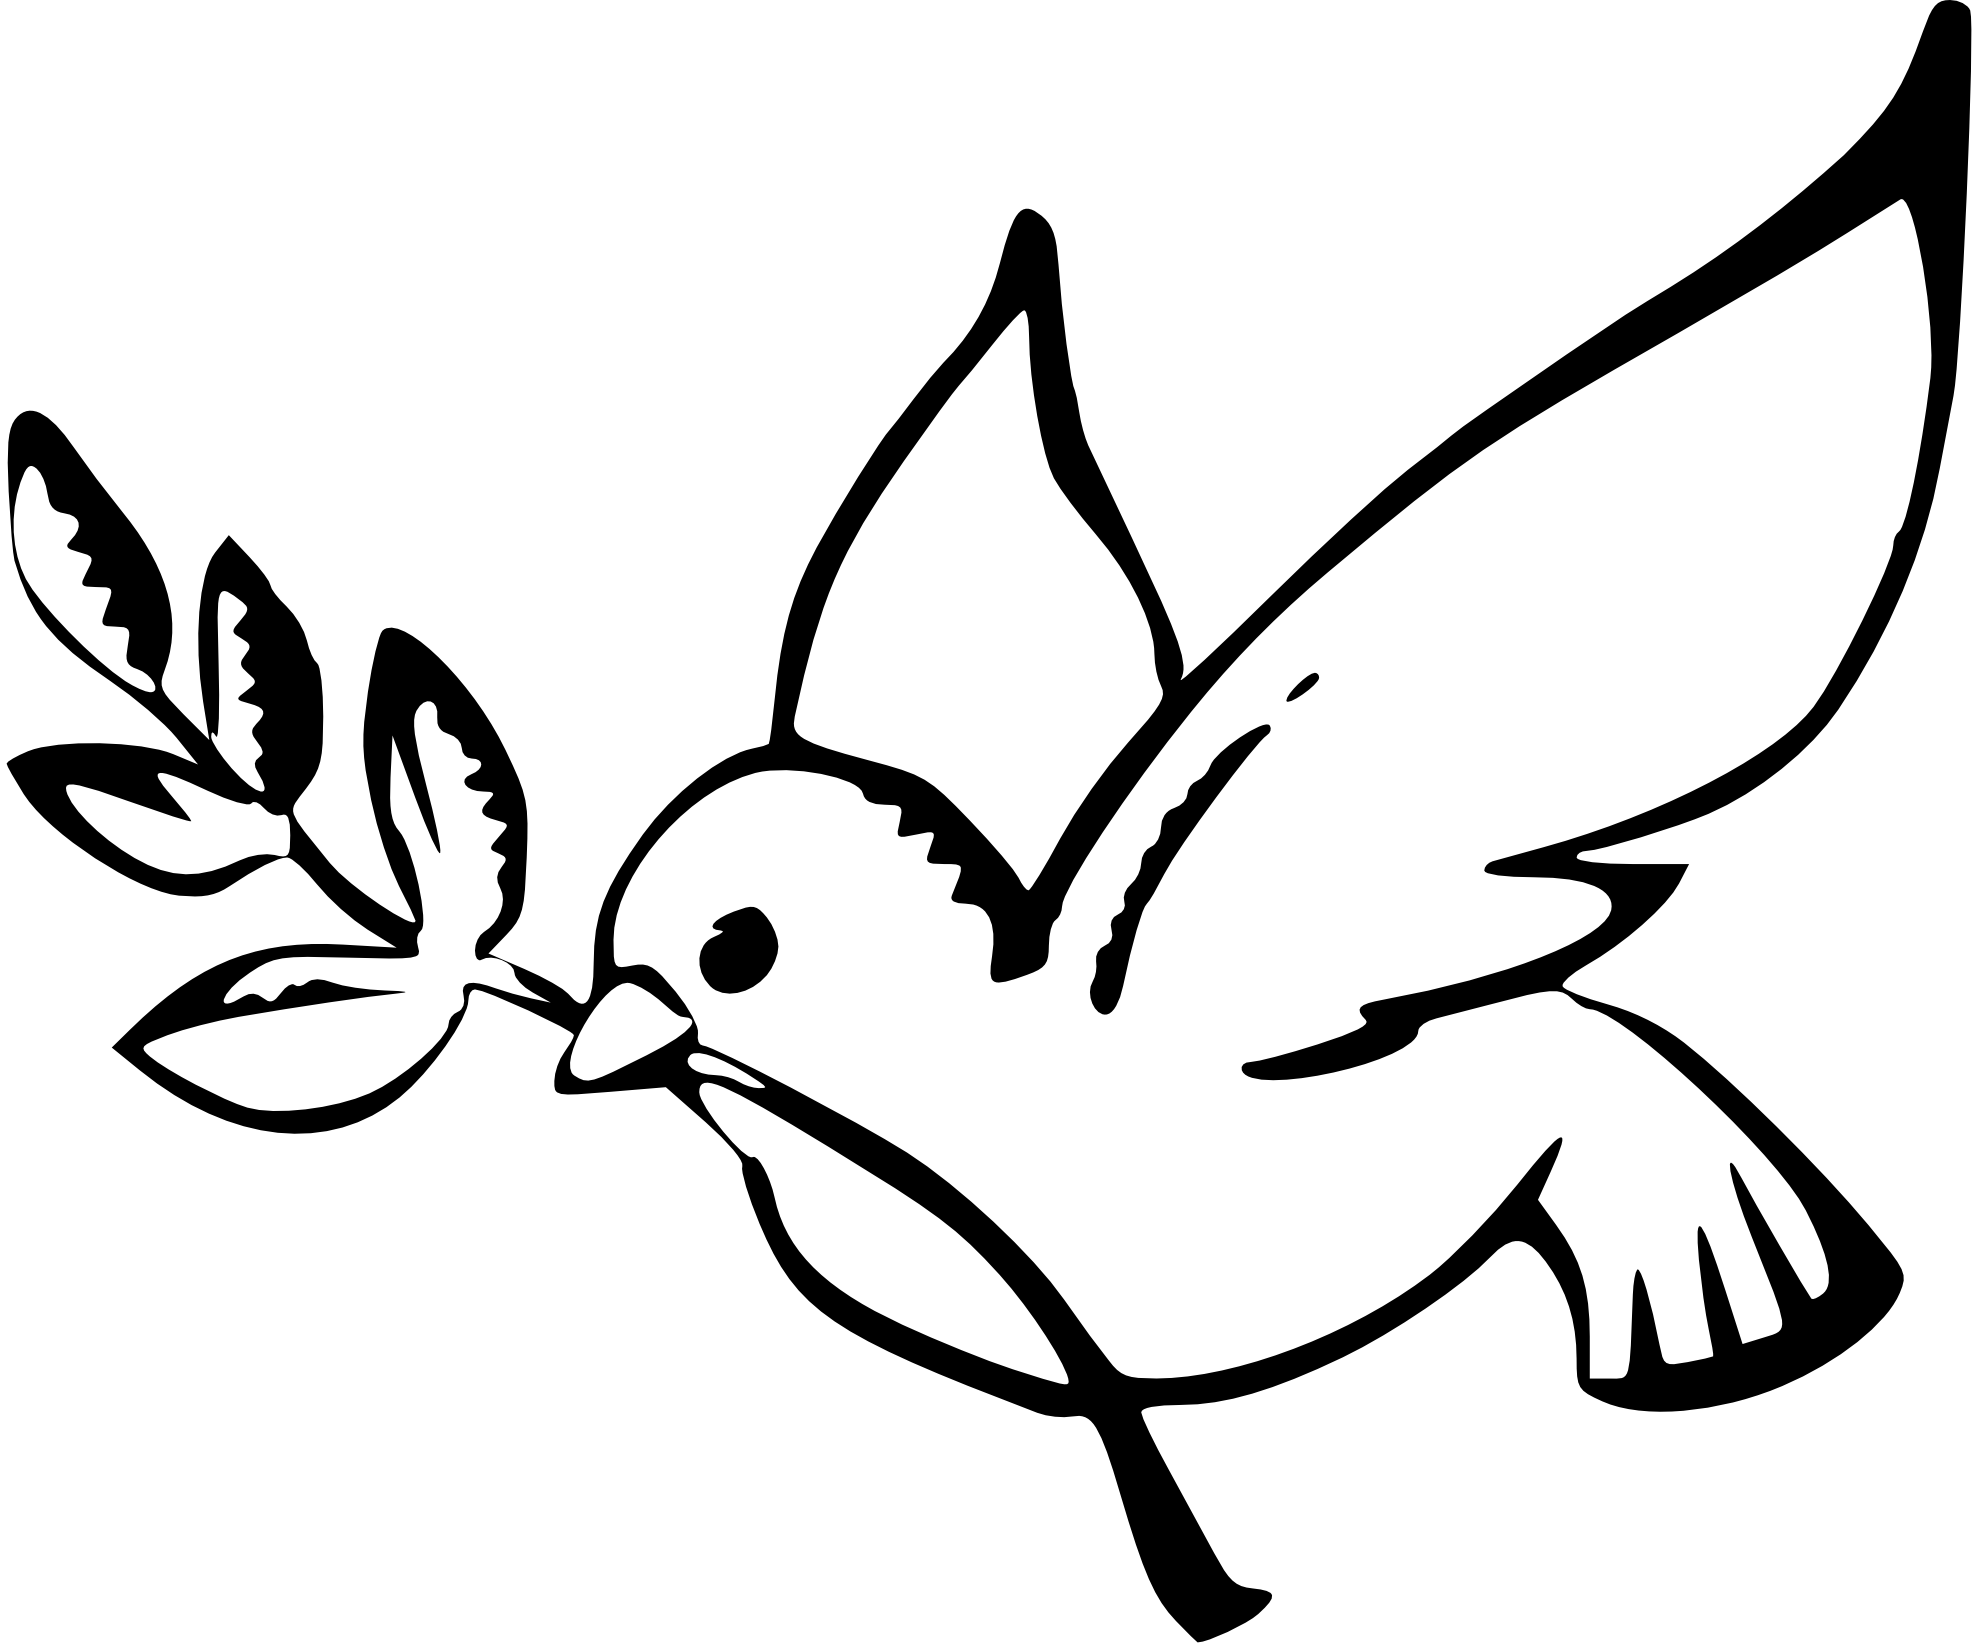 Christian symbol peace.